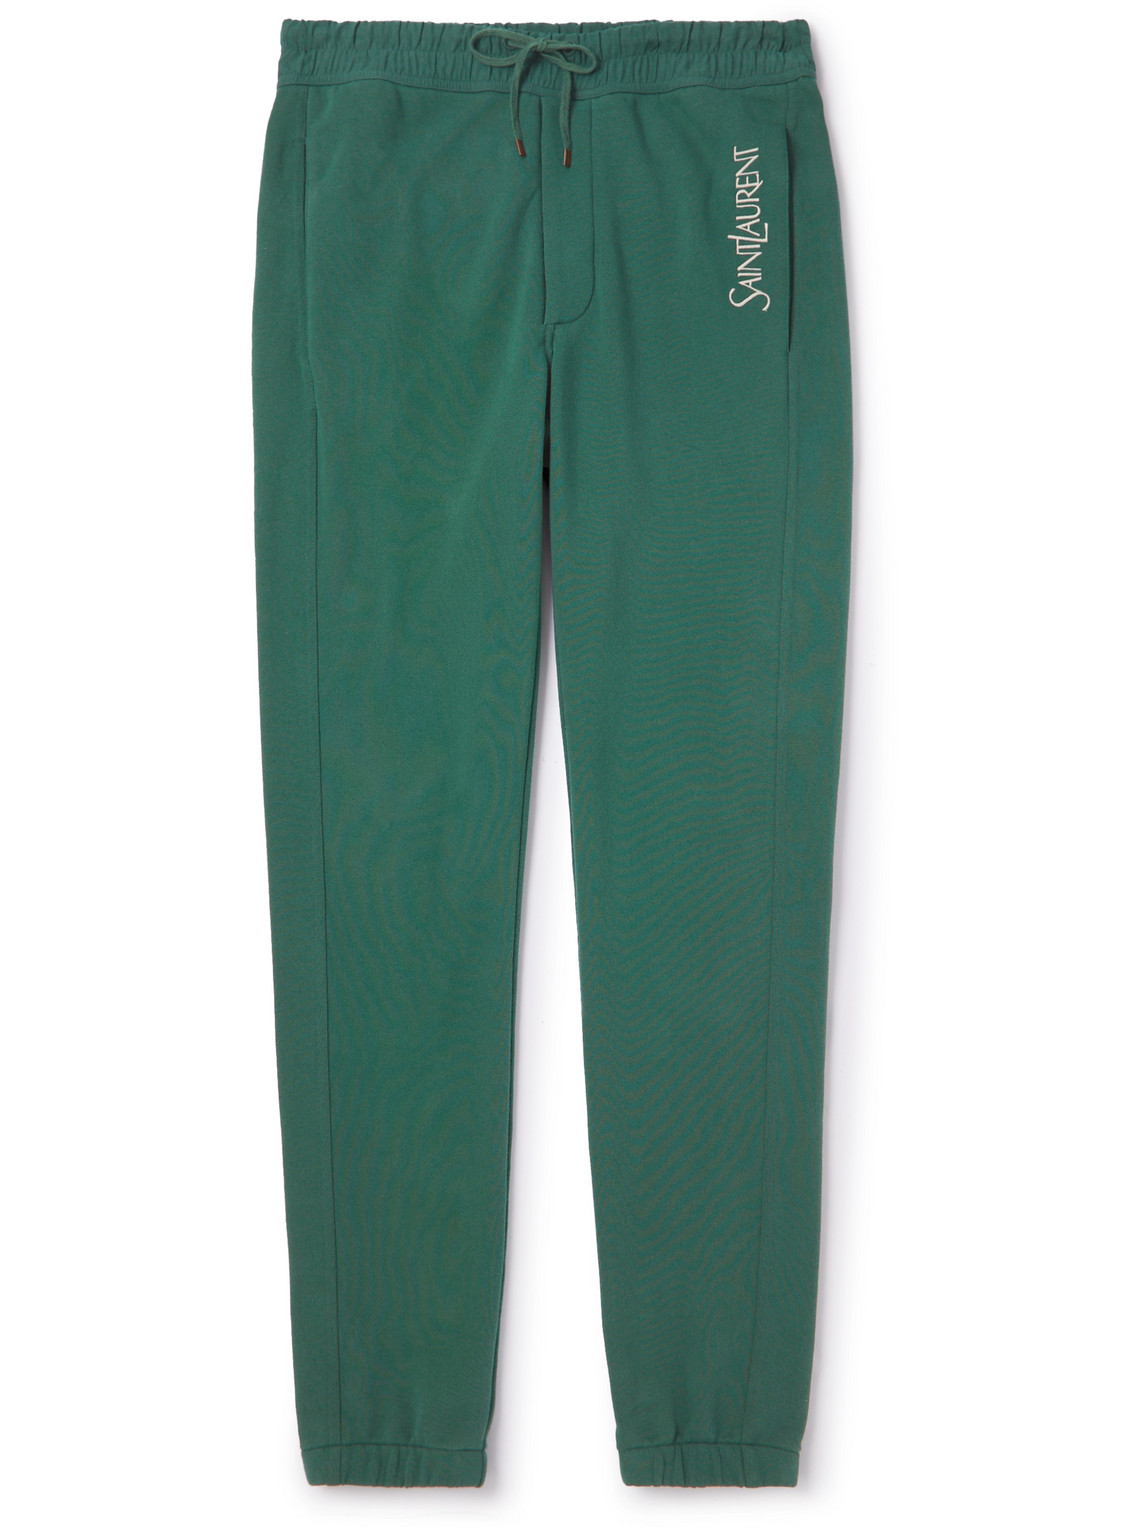 SAINT LAURENT - Tapered Logo-Embroidered Cotton-Jersey Sweatpants - Men - Green - L von SAINT LAURENT